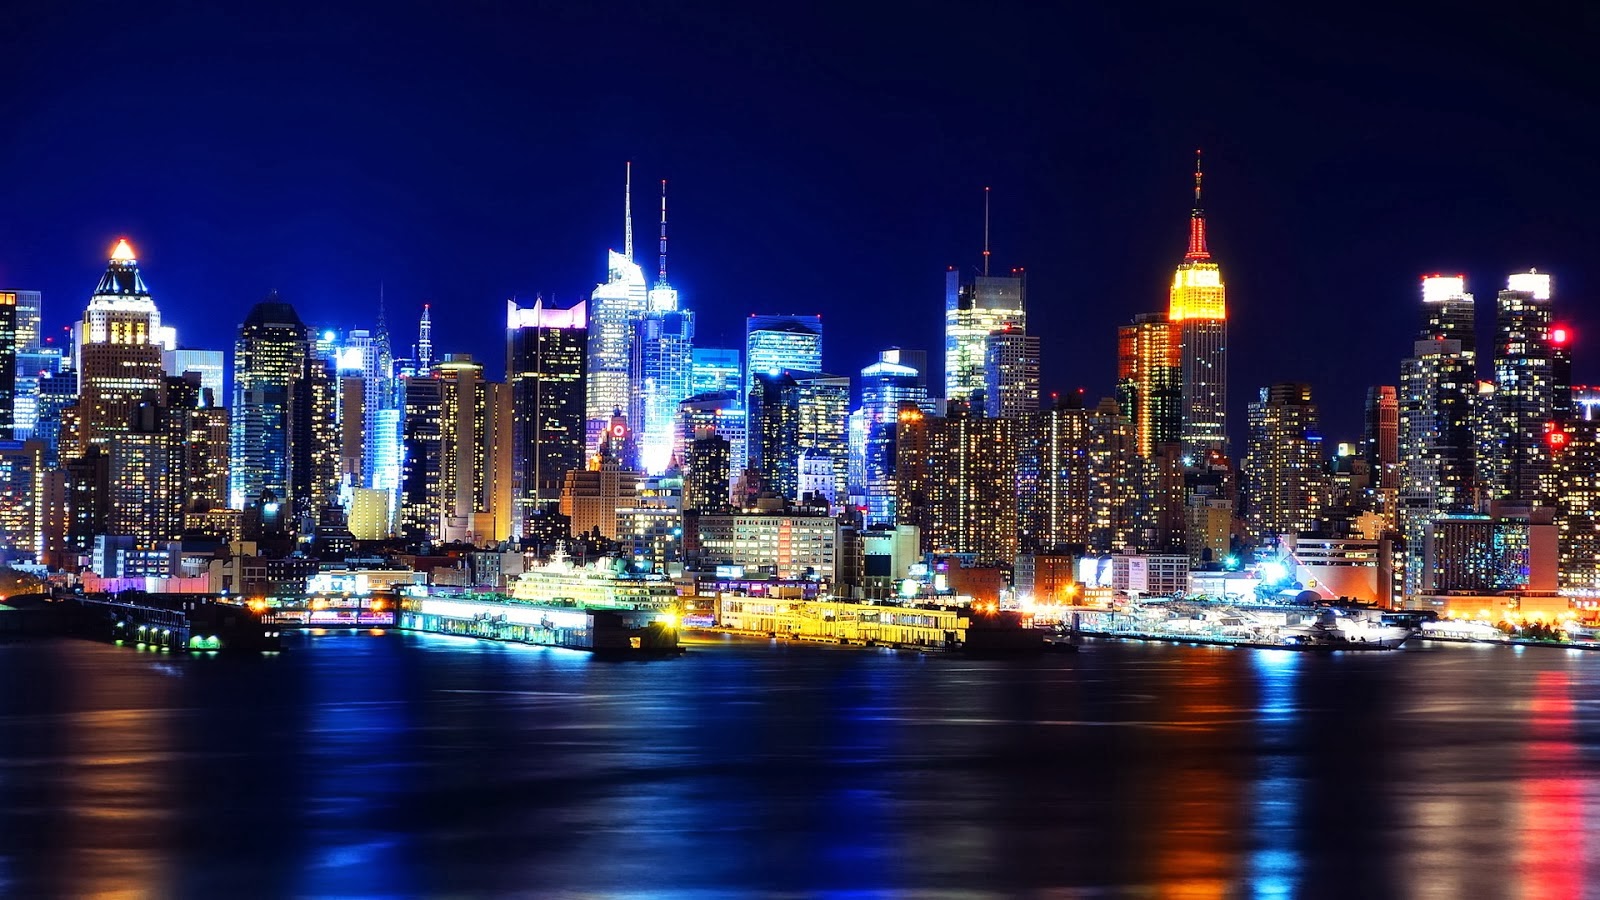 City HD Wallpaper 1080p New York